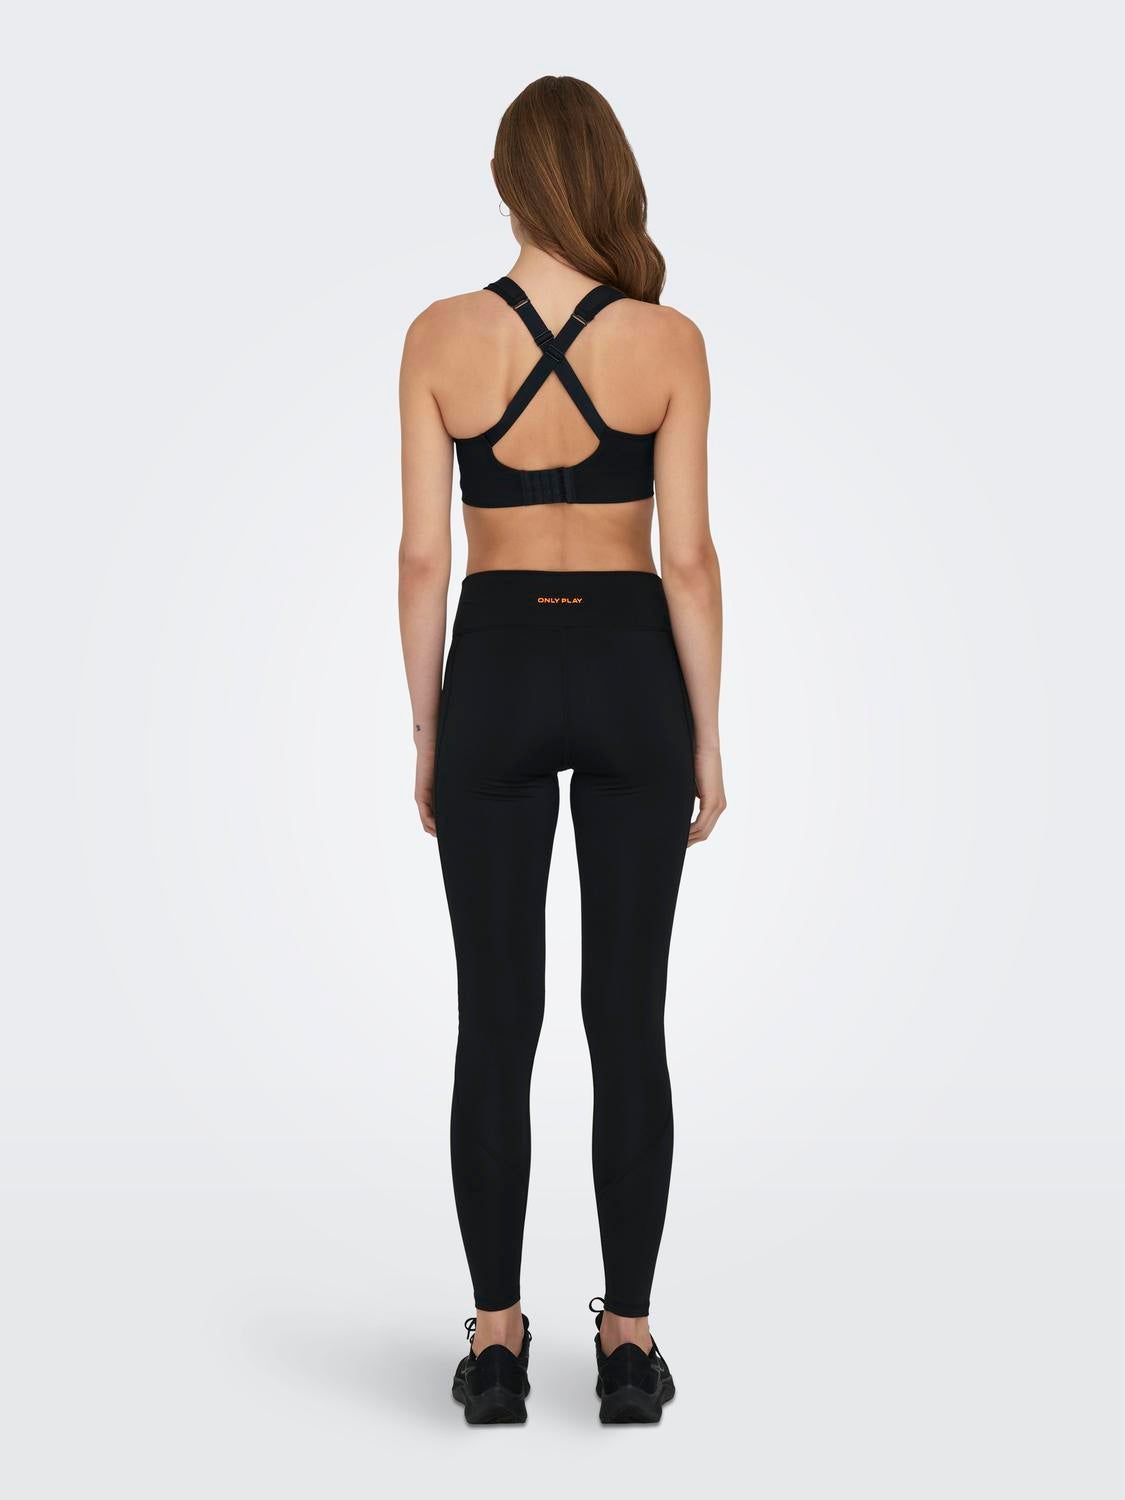 Taille haute butin leggings sport femmes Fitness yoga pantalon sans couture  gymnastique leggings extensible legging - AliExpress